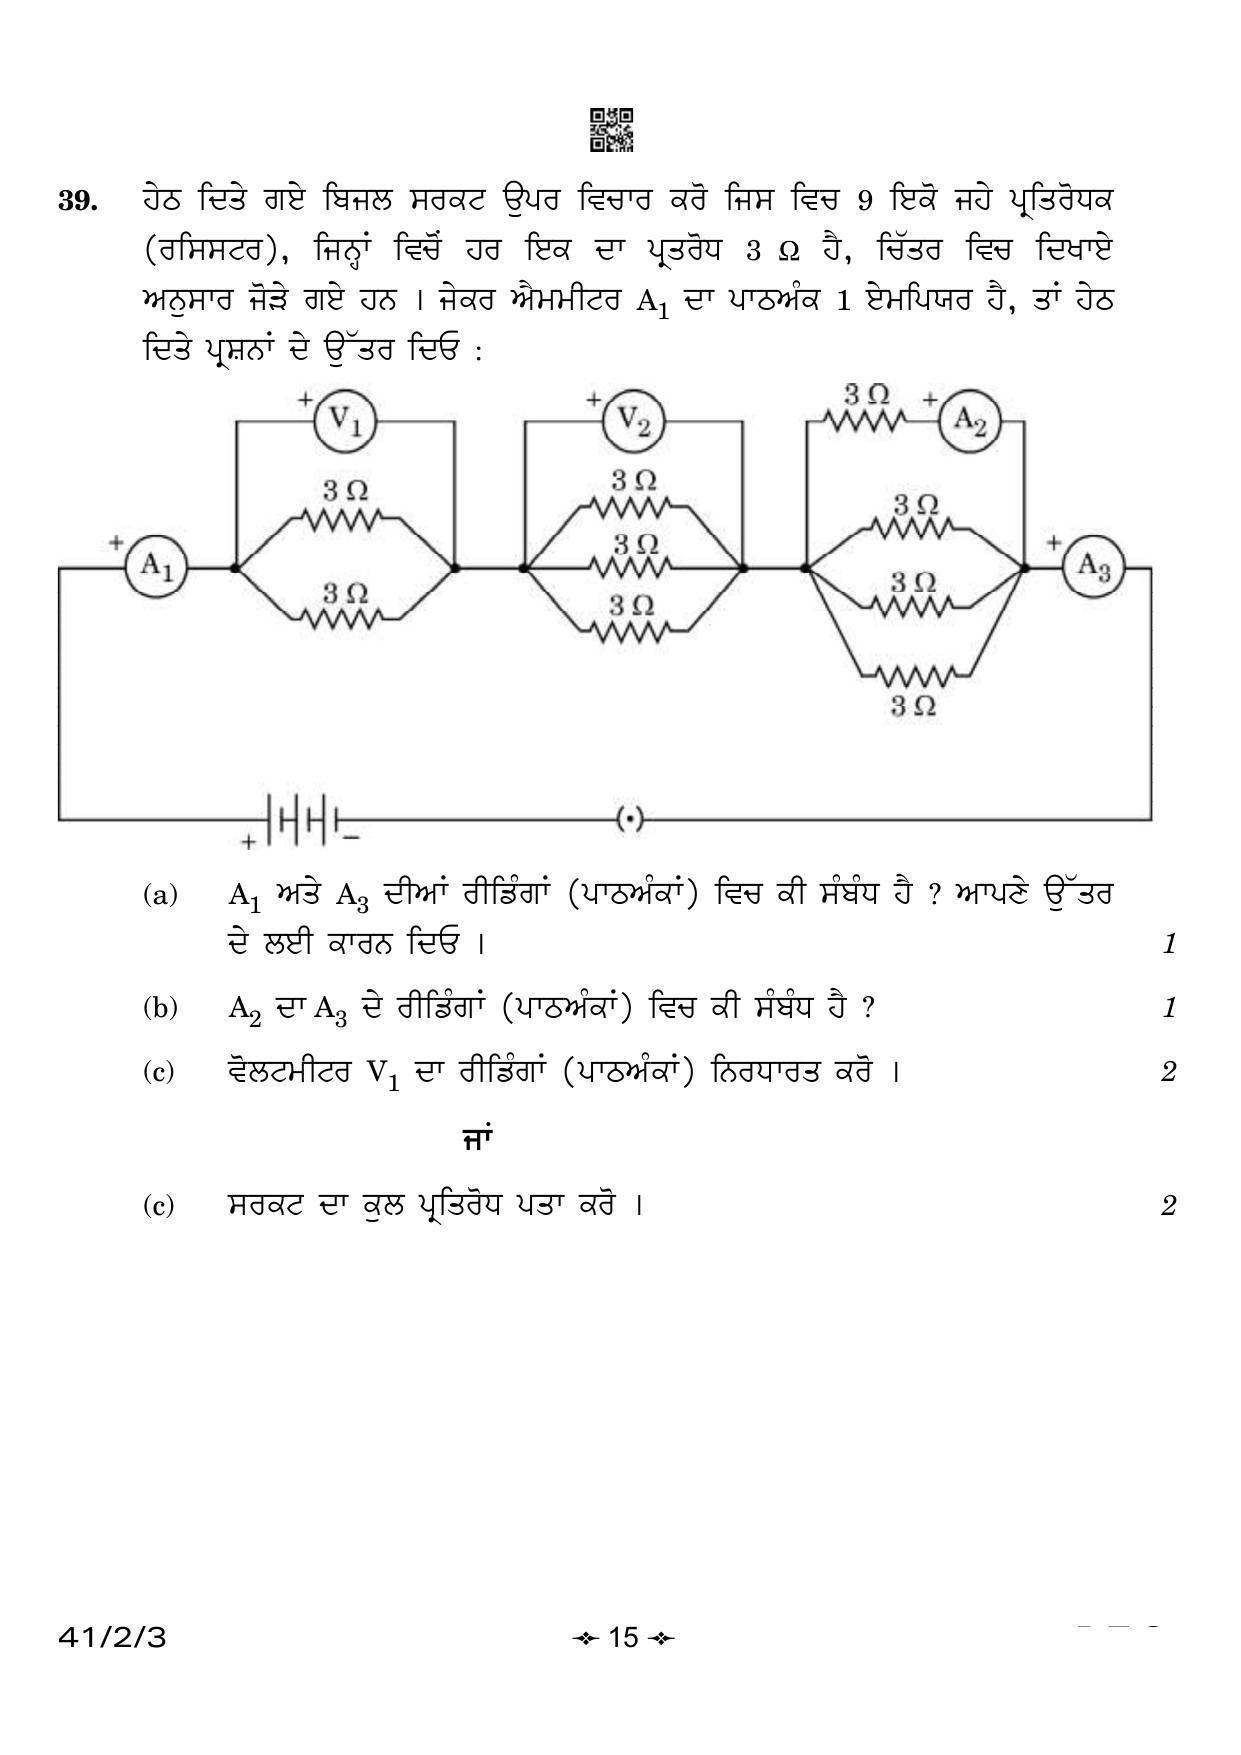 CBSE Class 10 41-2-3 Science Punjabi Version 2023 Question Paper - Page 15